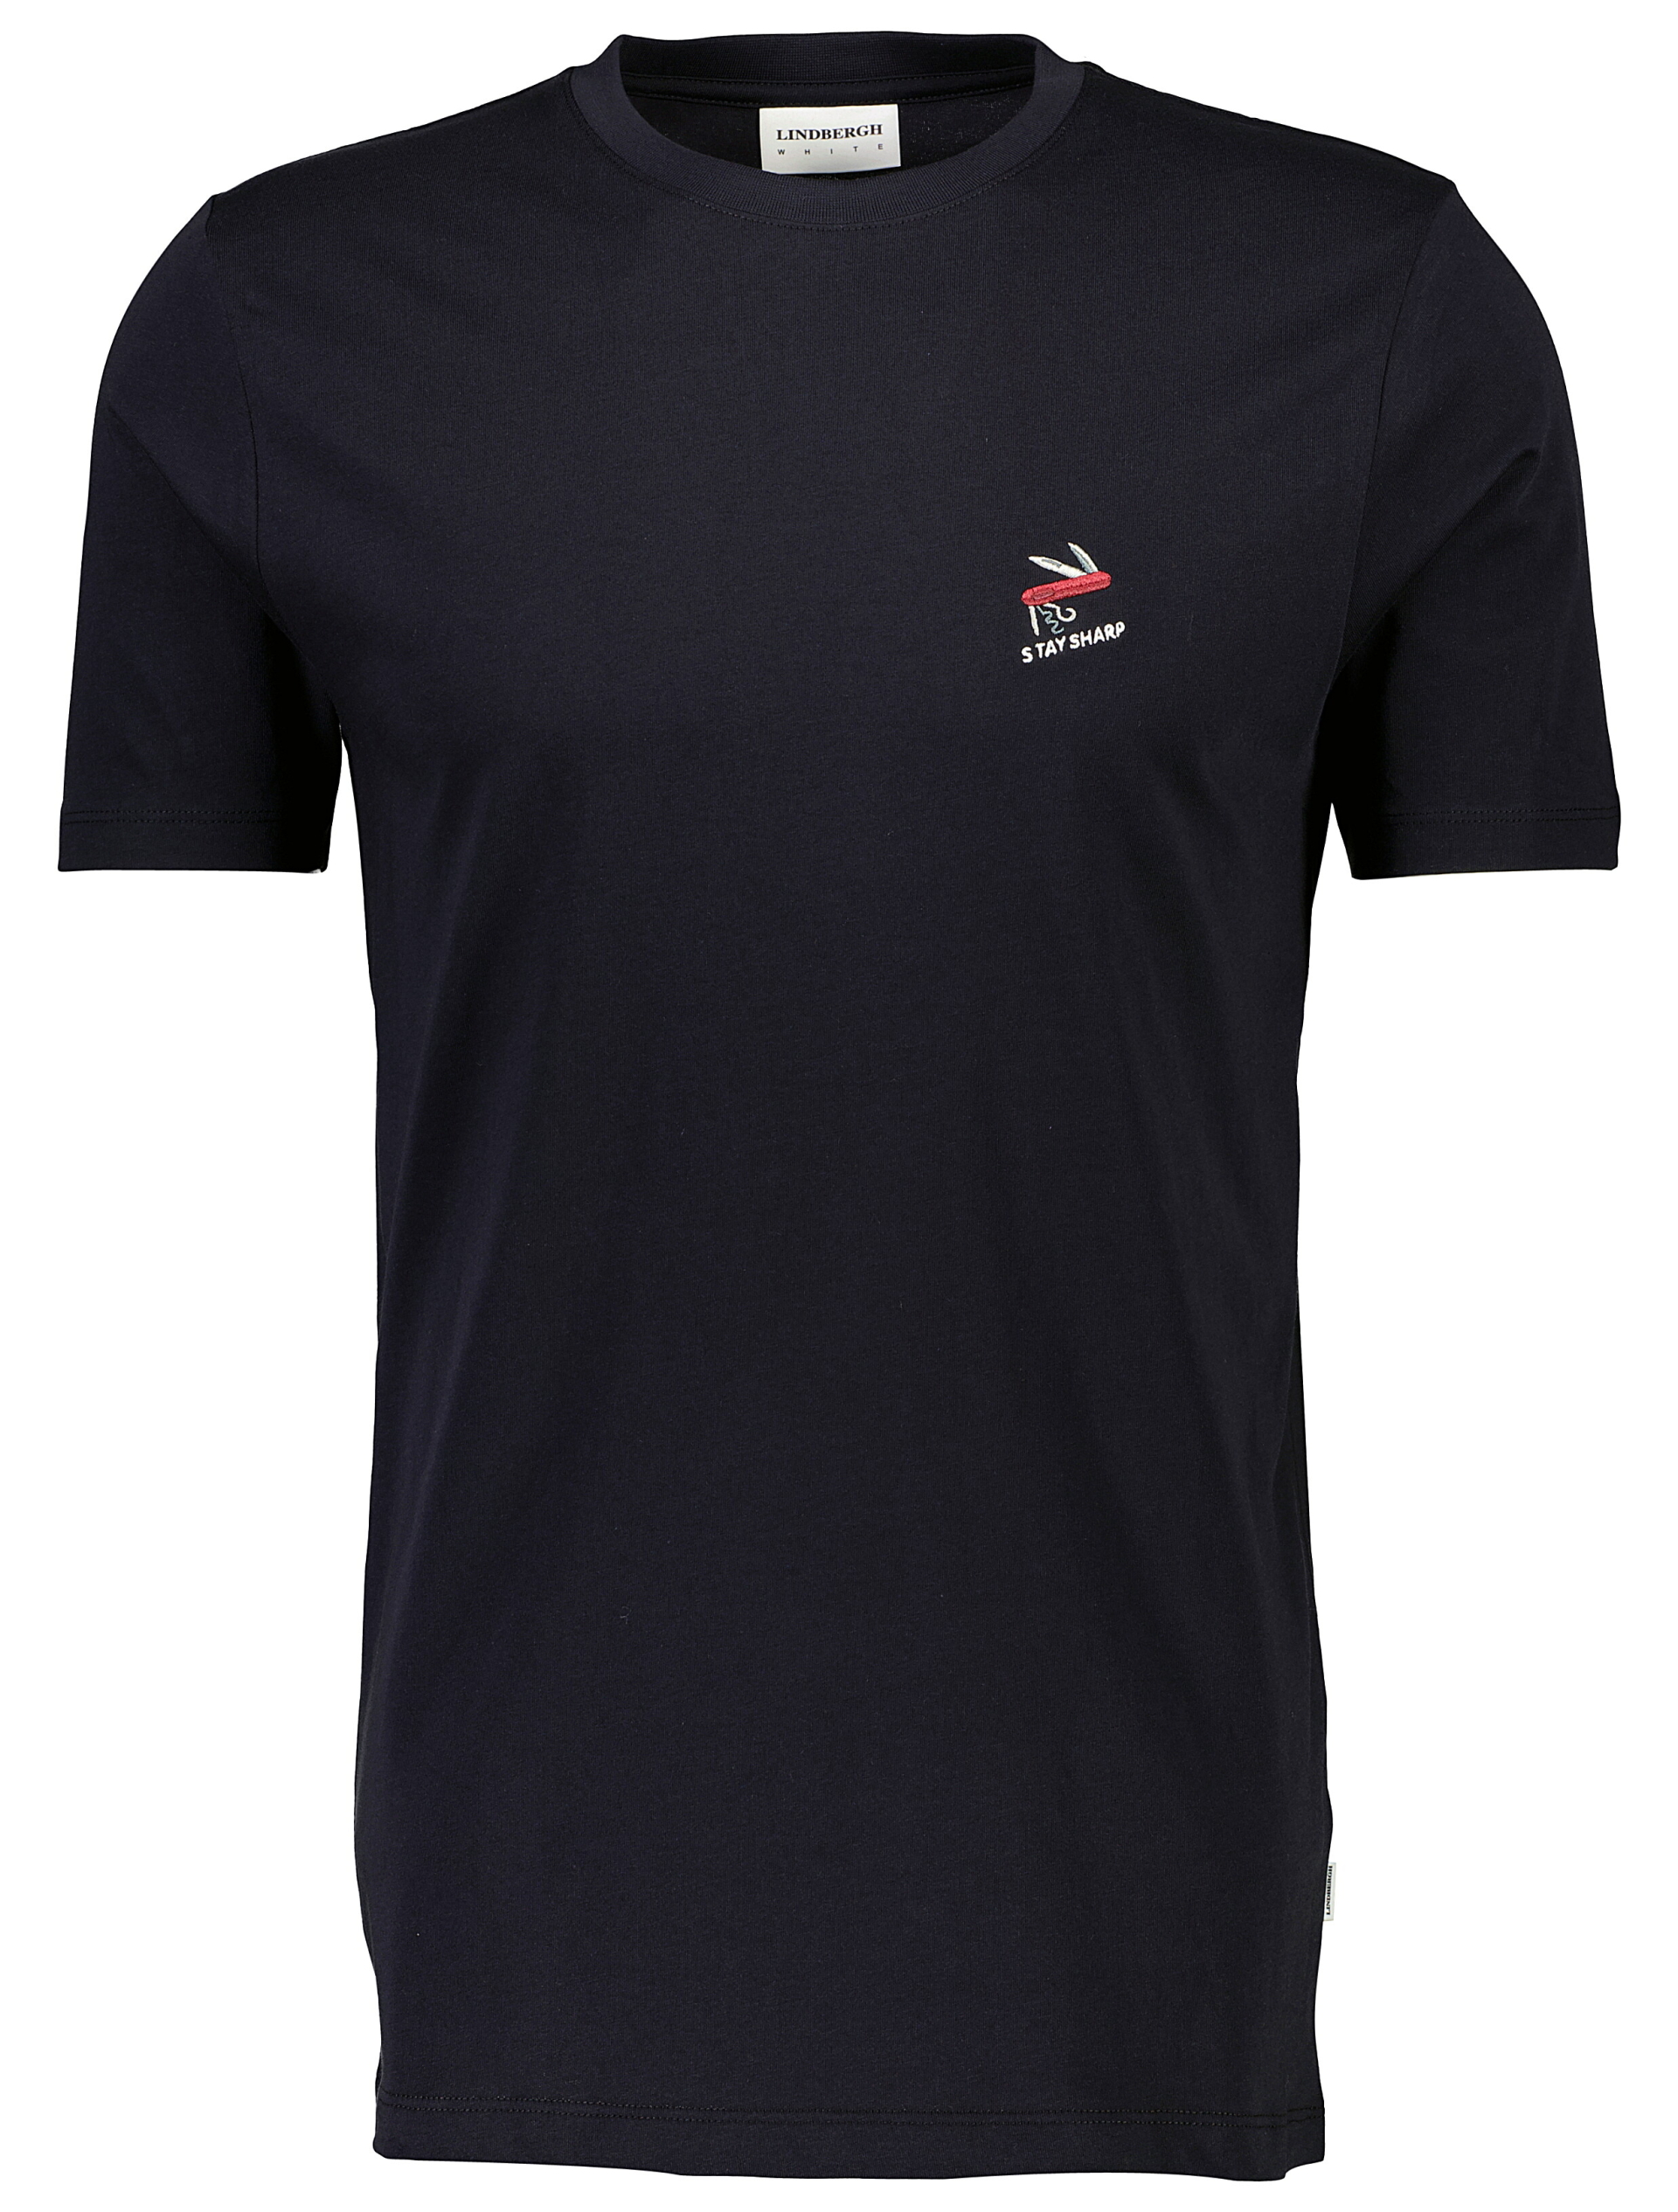 Lindbergh T-shirt svart / true black